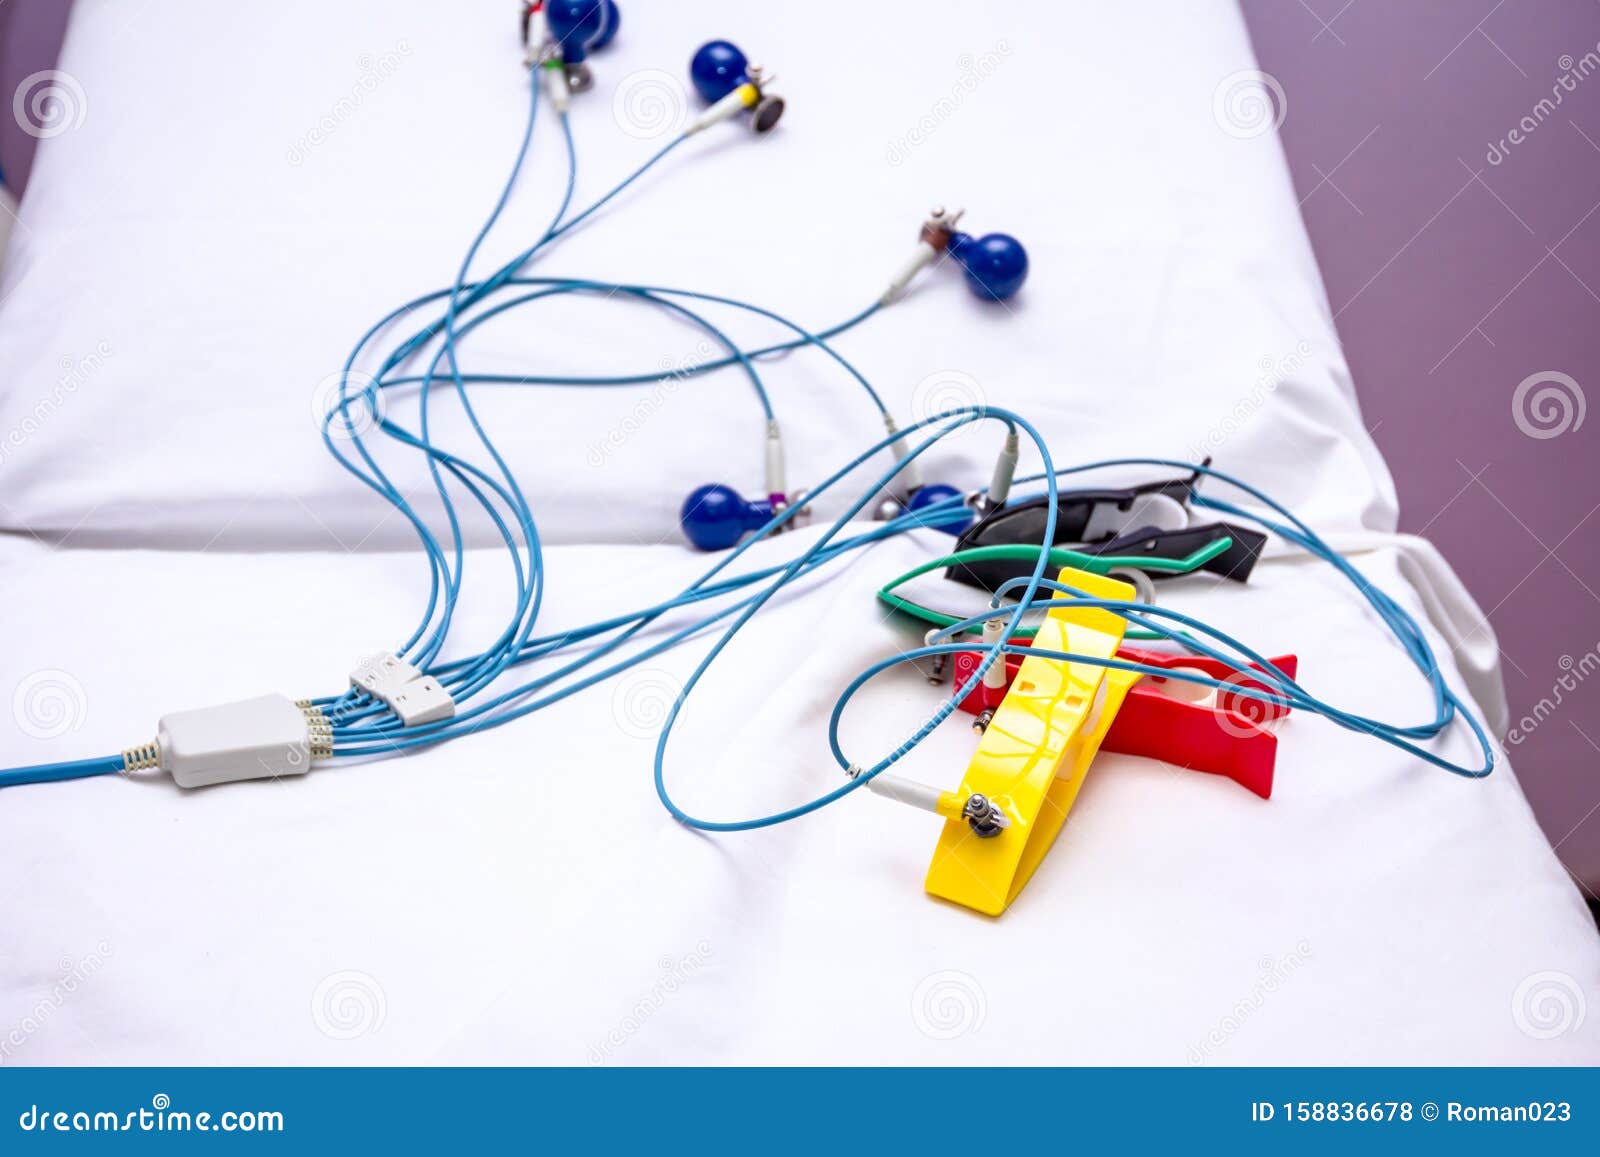 electrocardiograph sensors, medical equipment